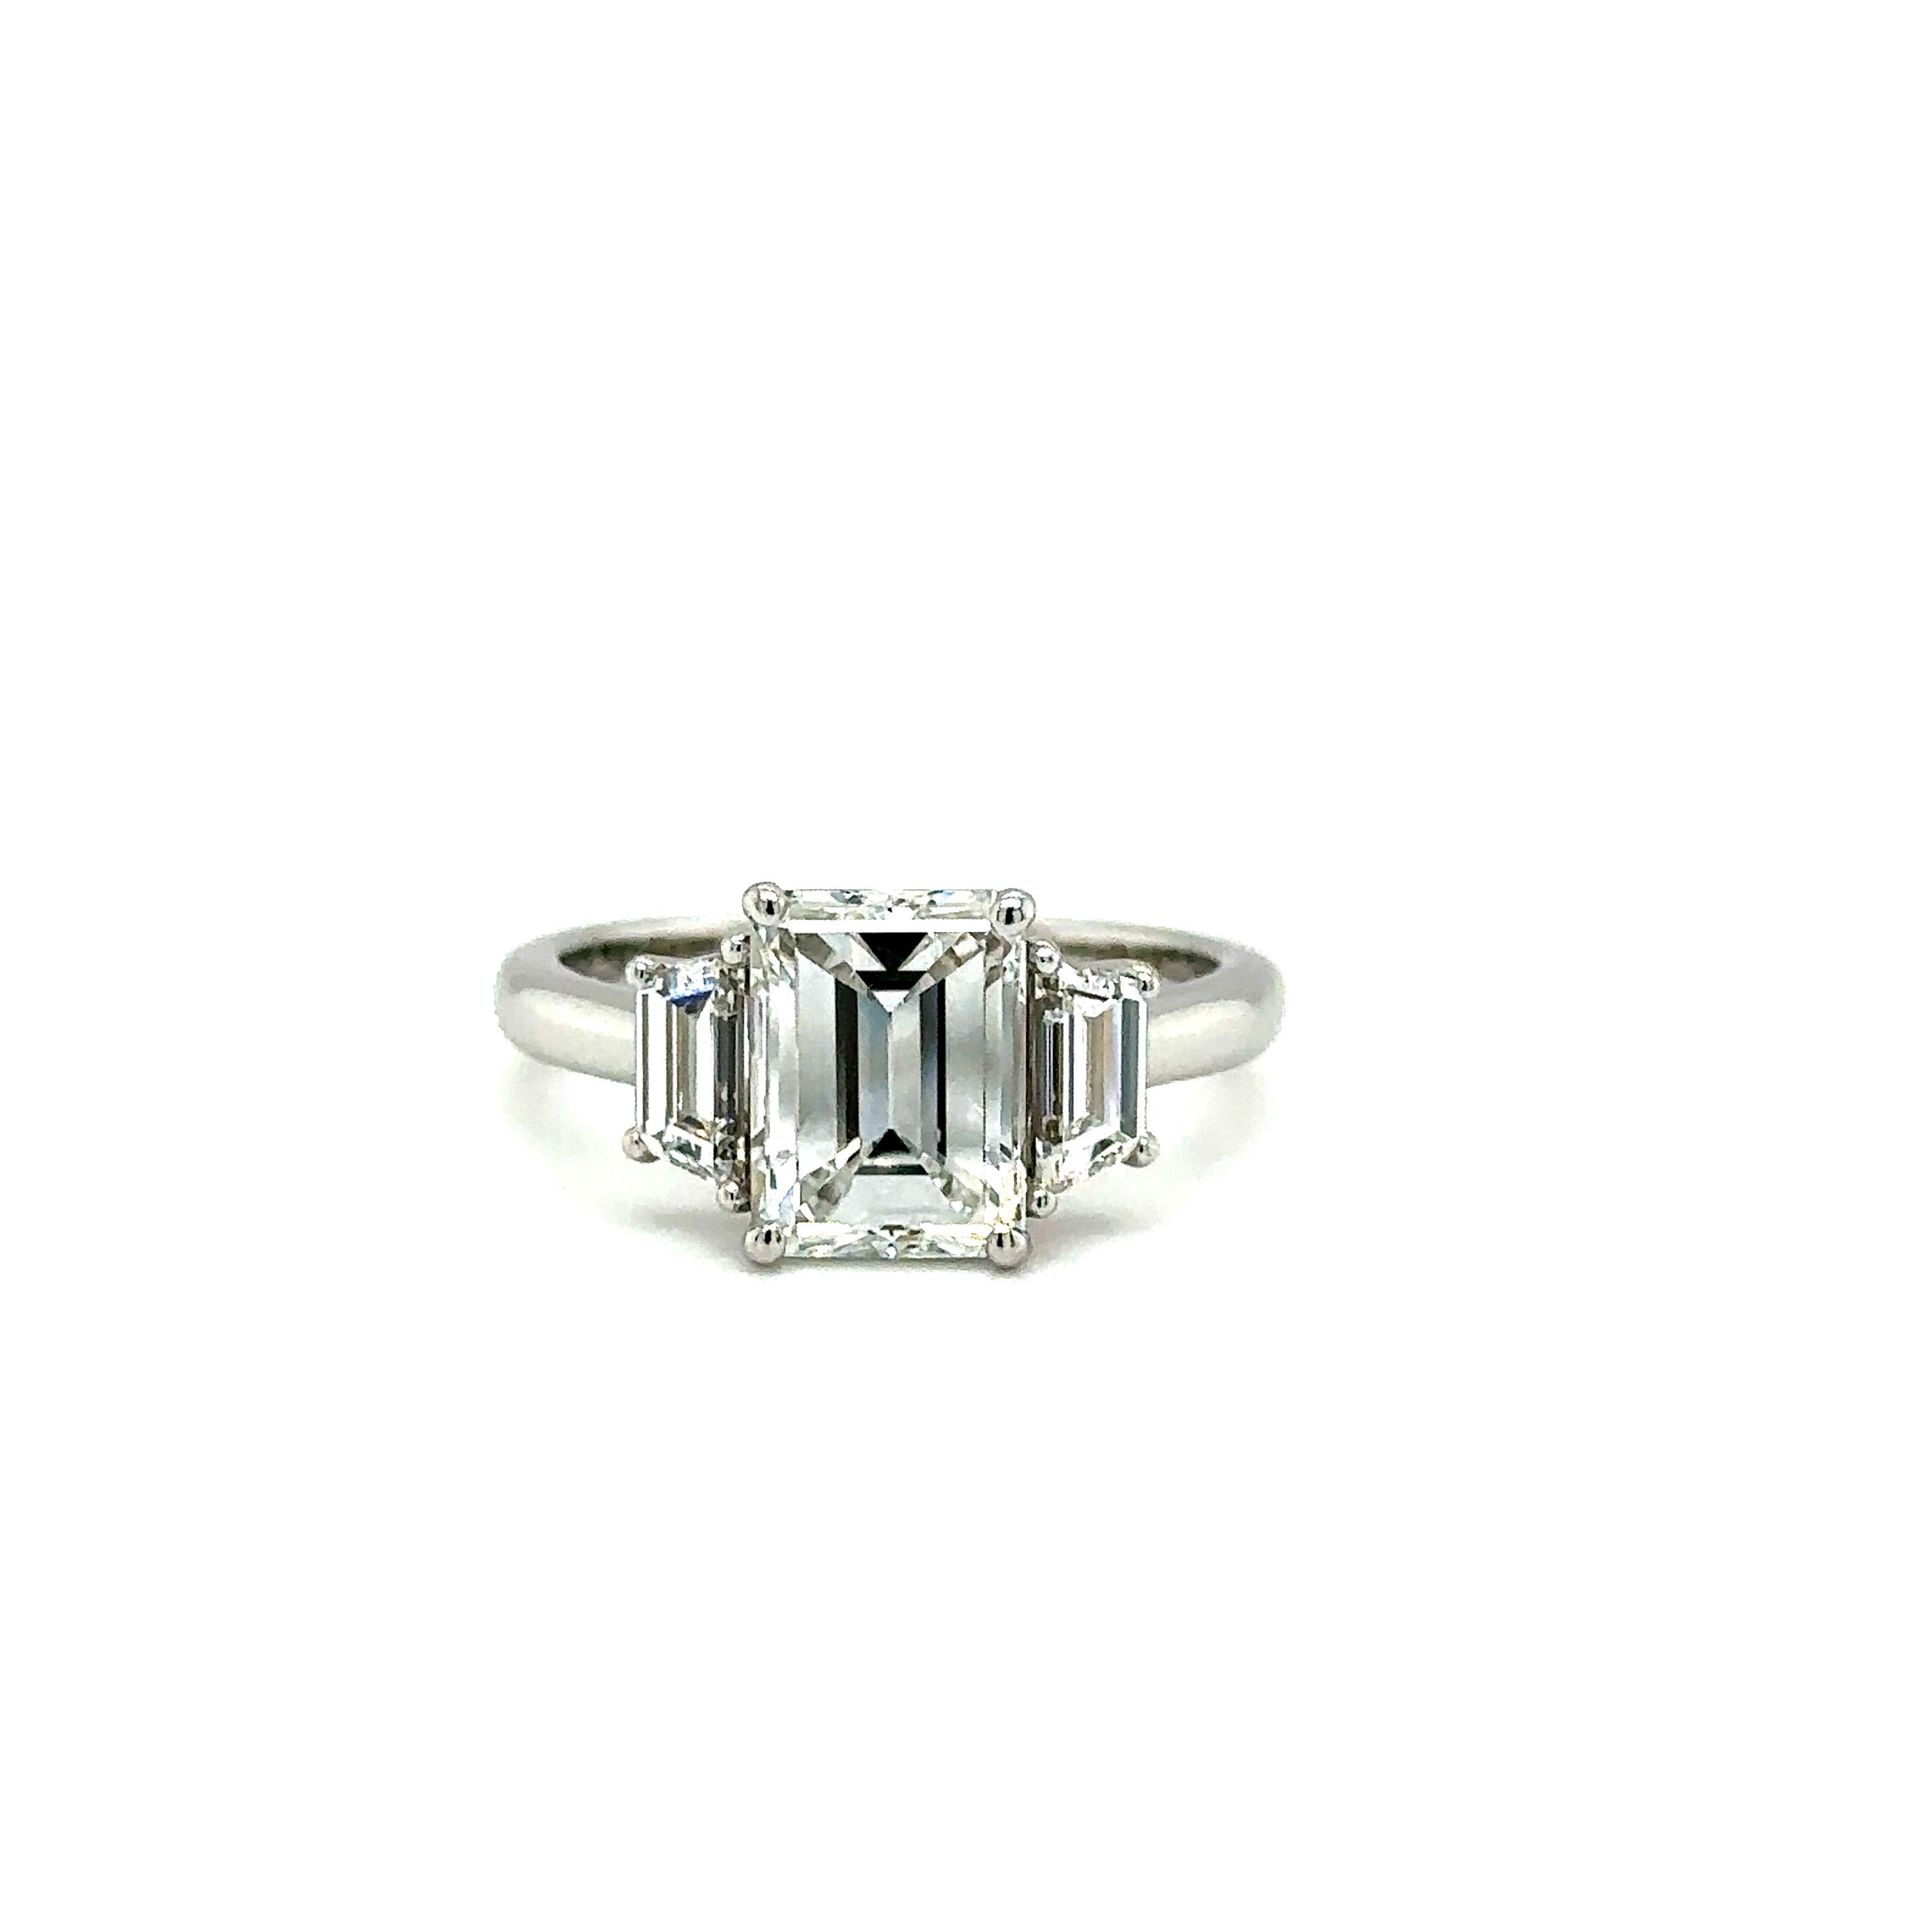 A Platinum Emerald Cut Diamond Ring